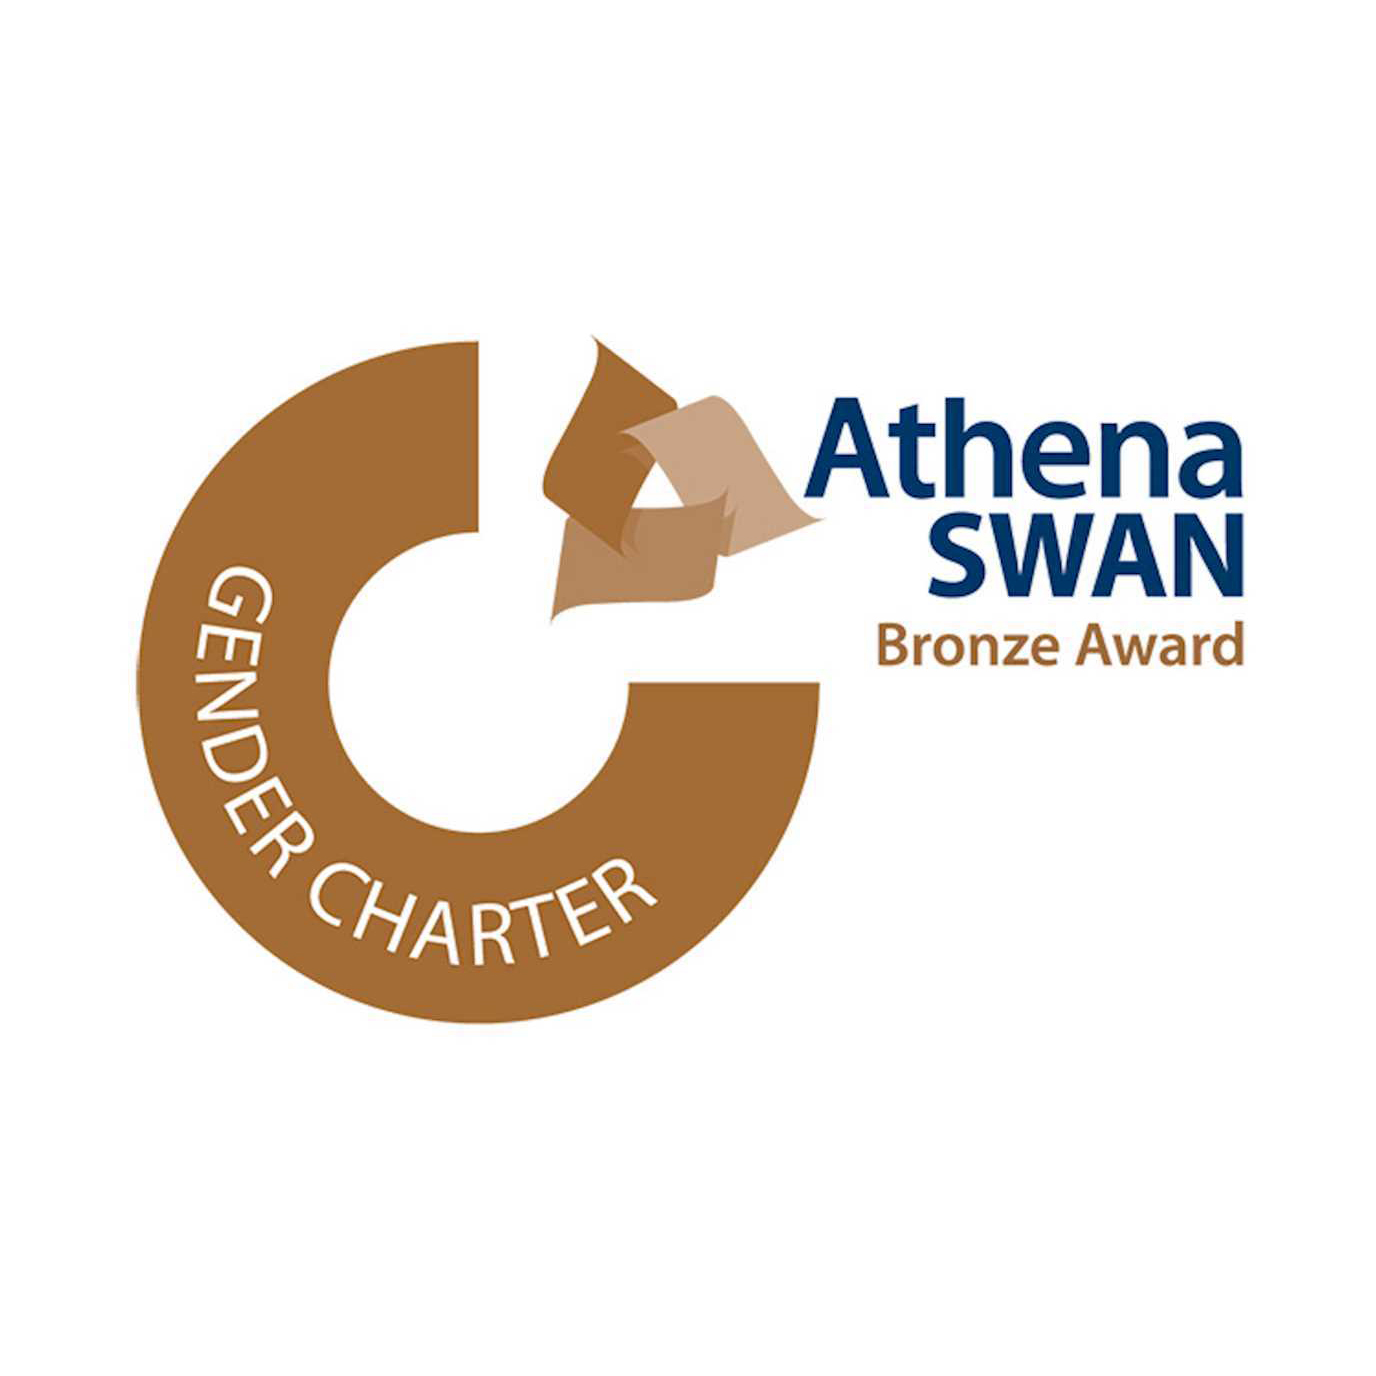 Athena Swam gender charter bronze award logo small